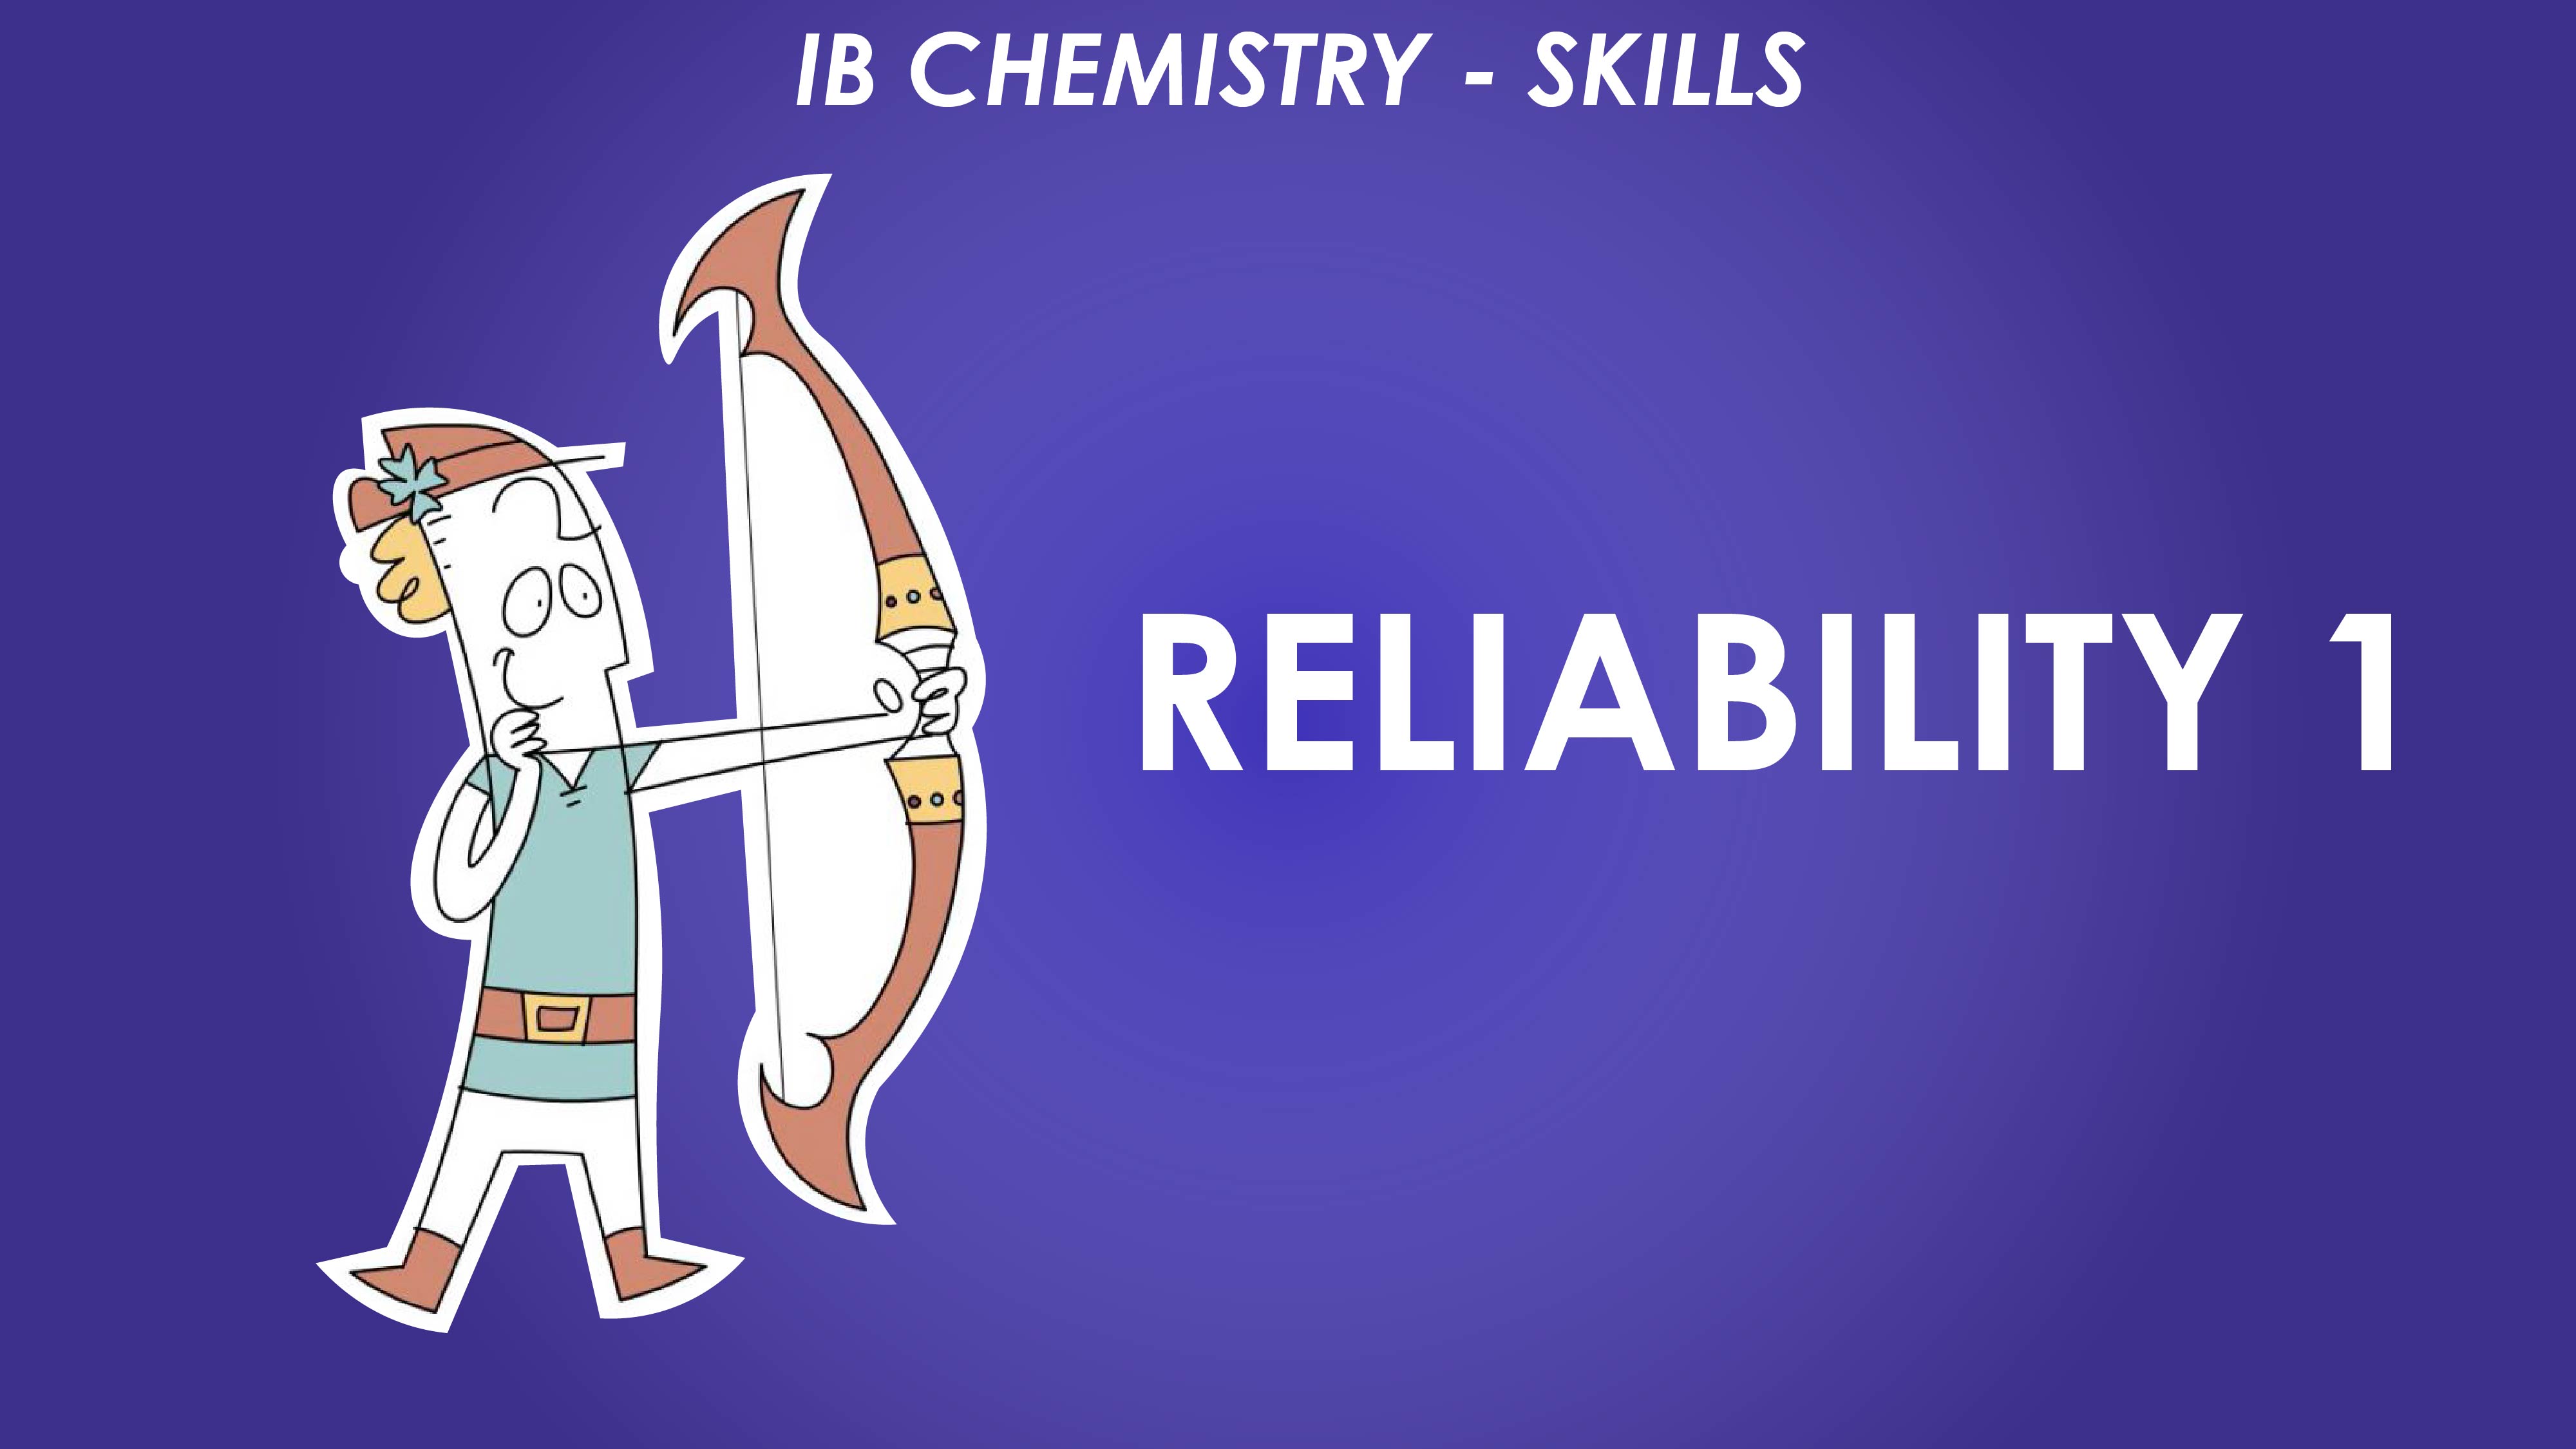 Reliability 1 - IB Chemistry Skills